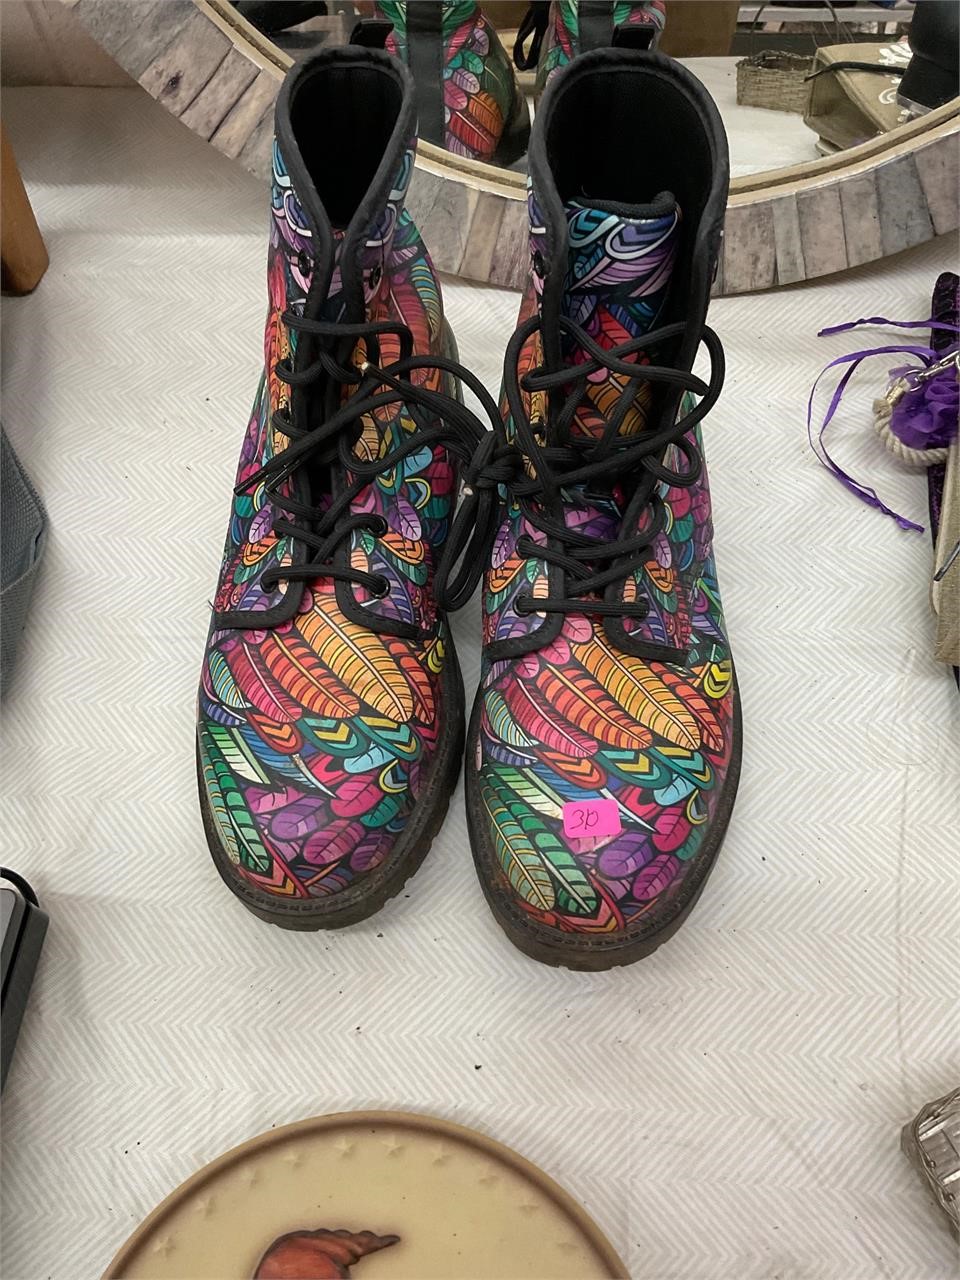 Decorative Boots